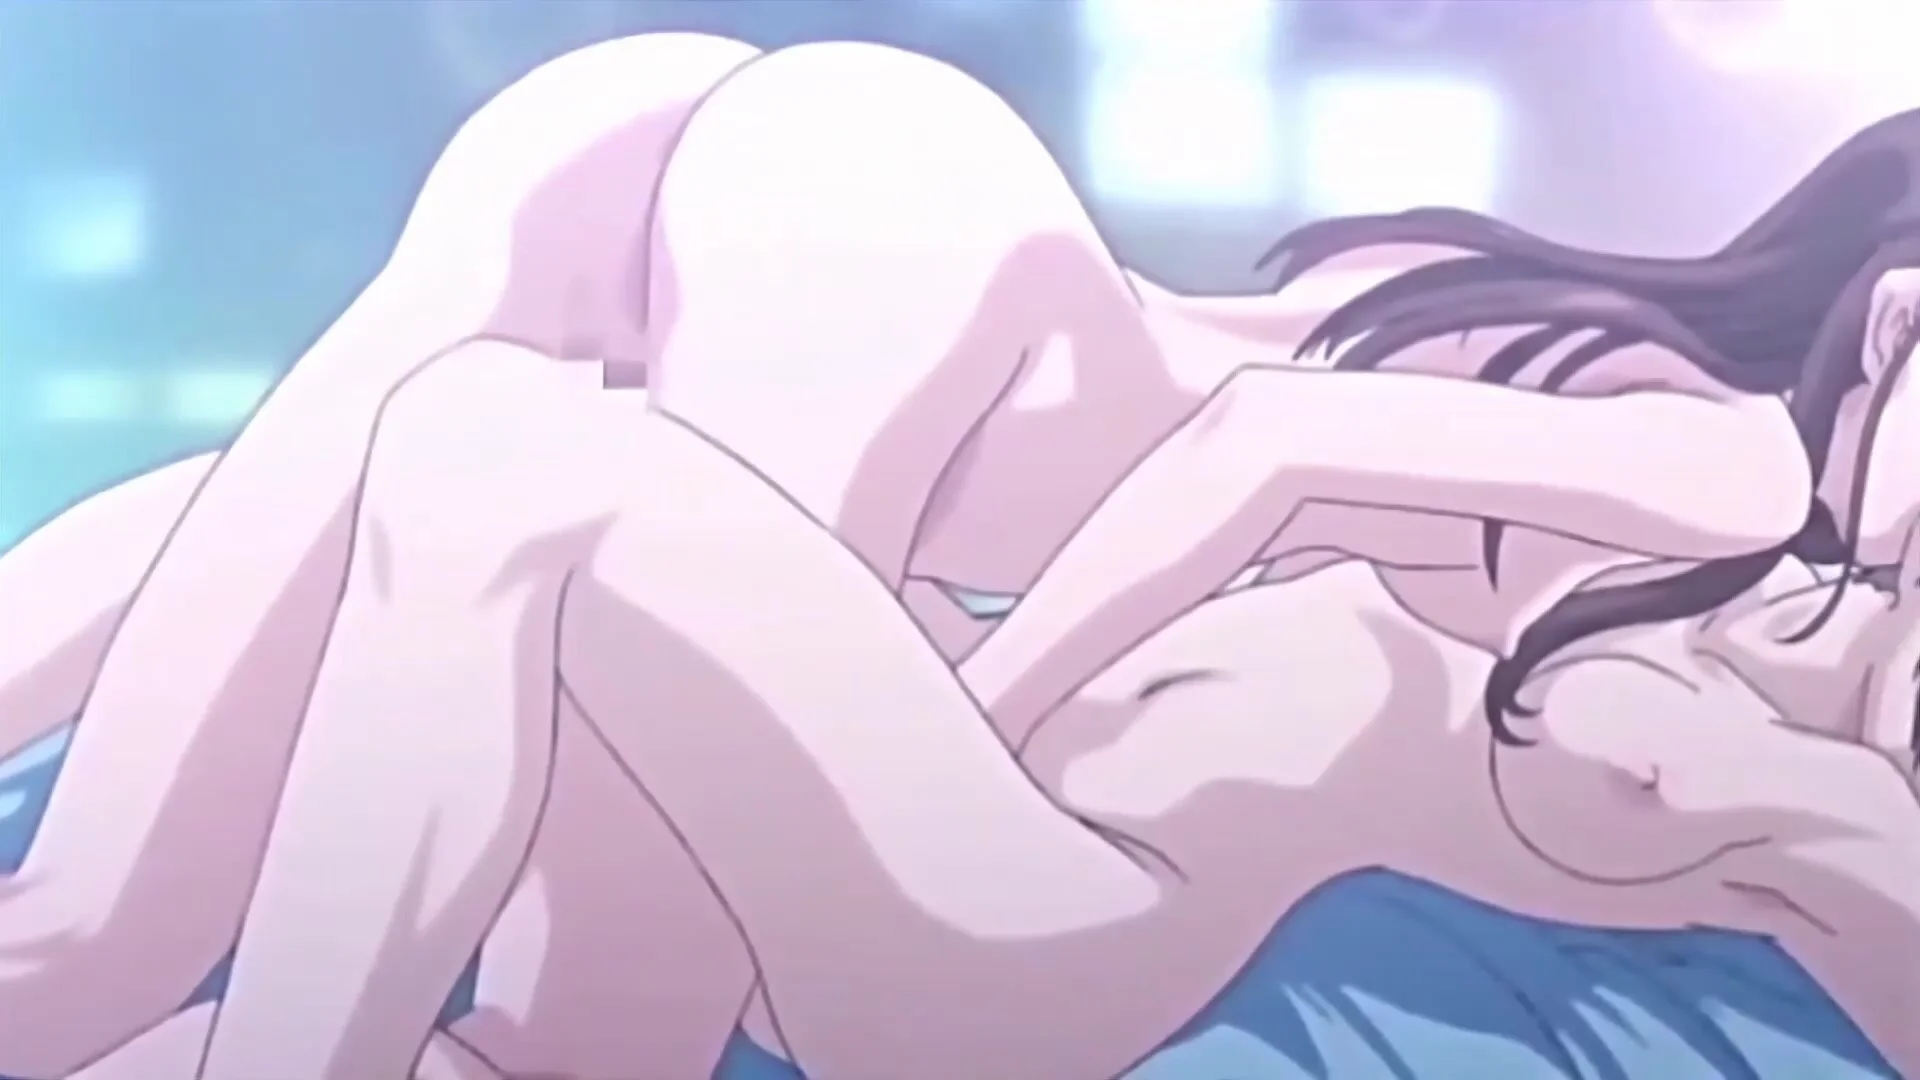 Assfucking Anime Lesbian Sex - Lesbian girl Fast Heartbeat Sex Anime - ThisVid.com